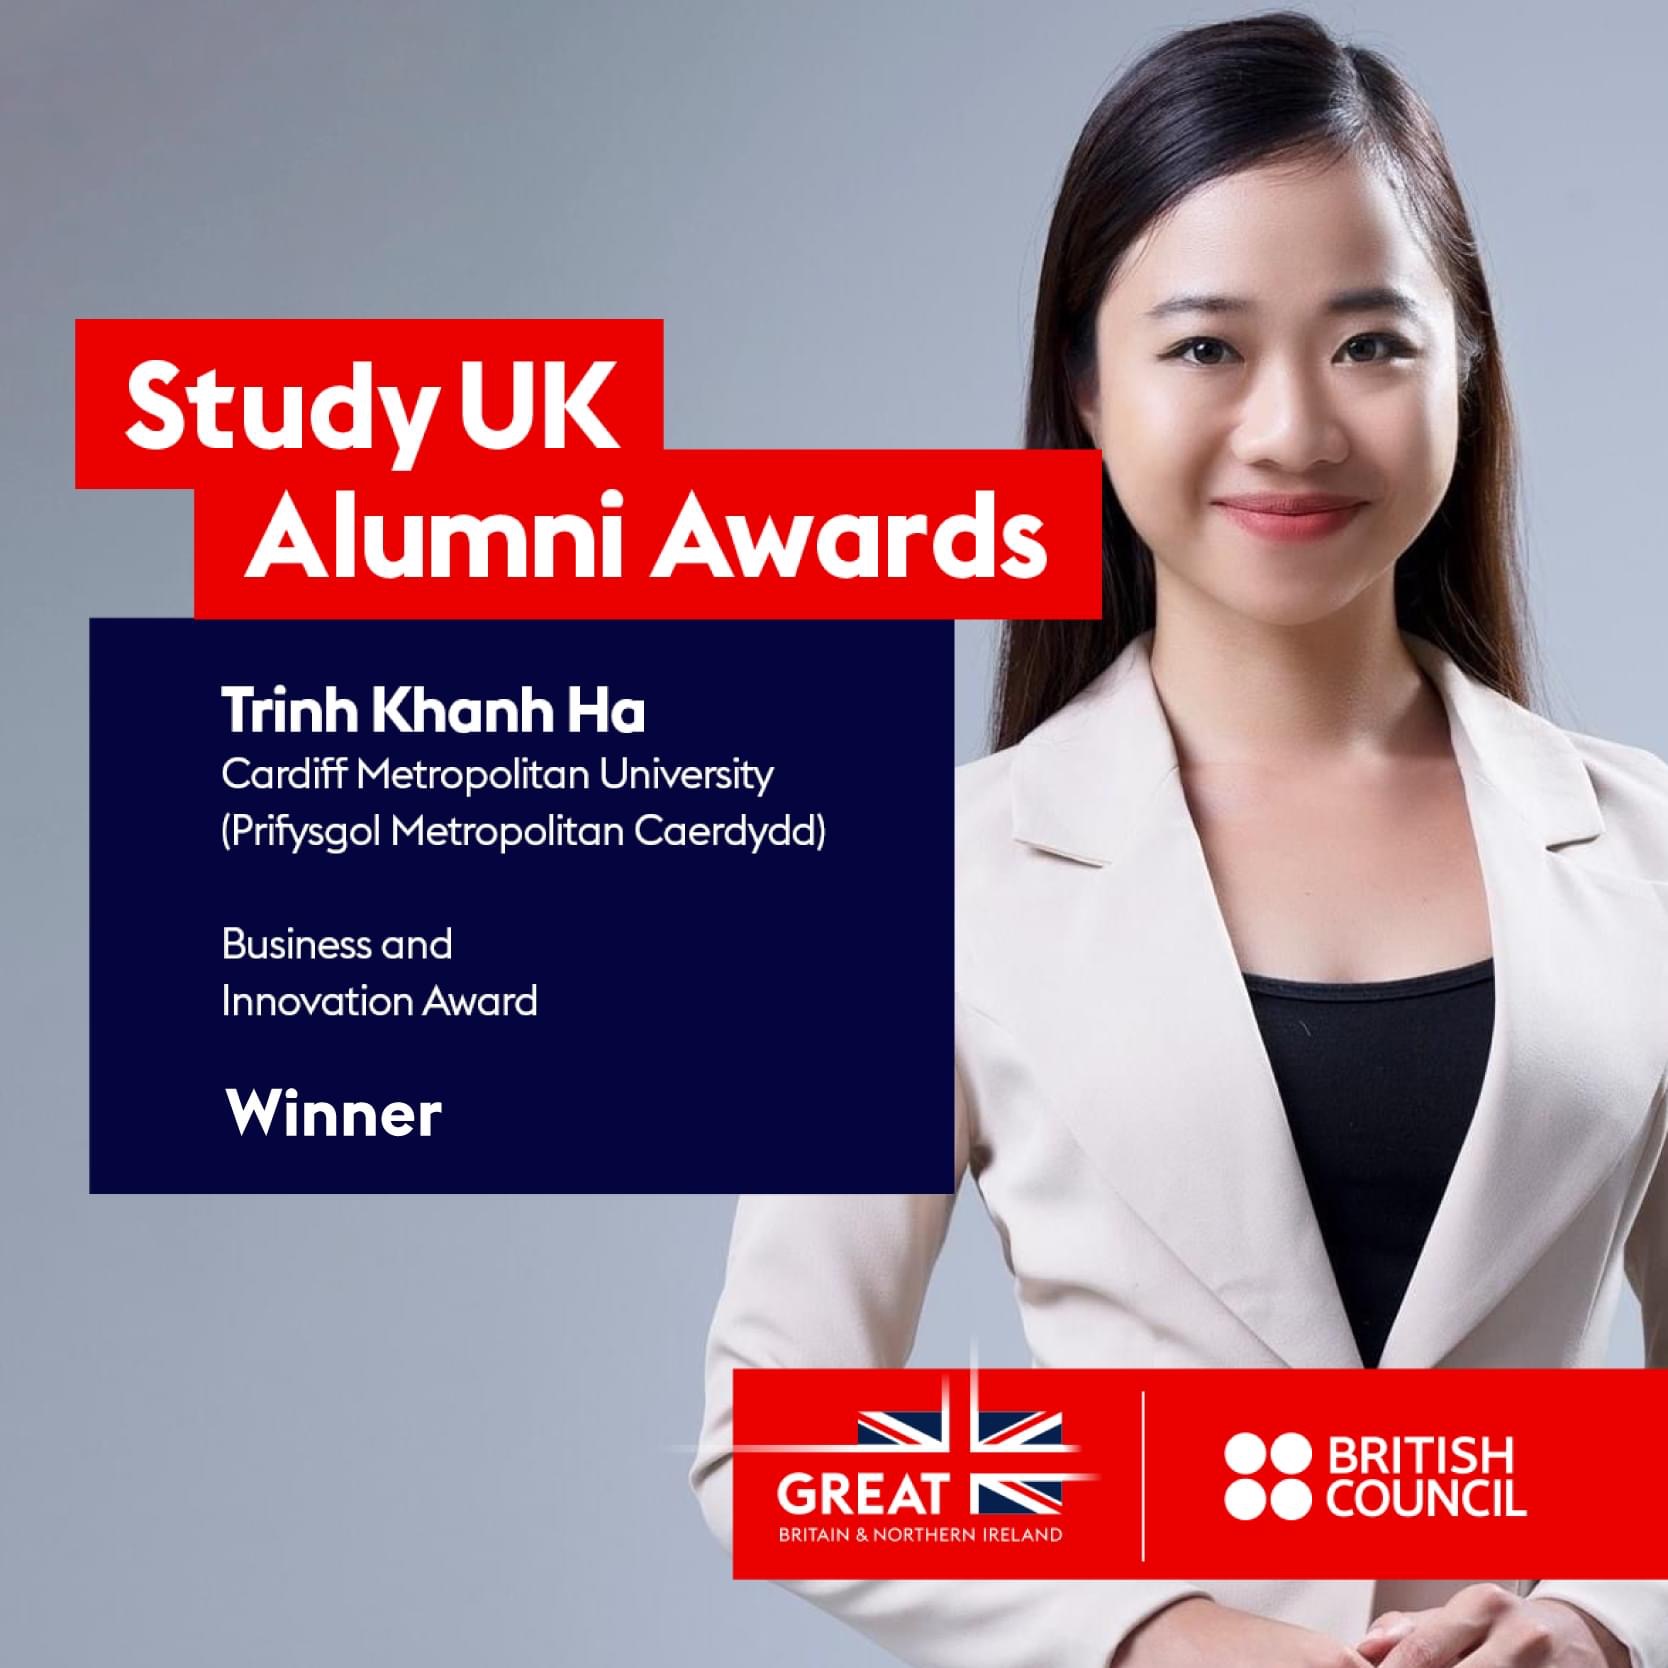 StudyUK Alumni awards winner graphic featuring Trinh Khanh